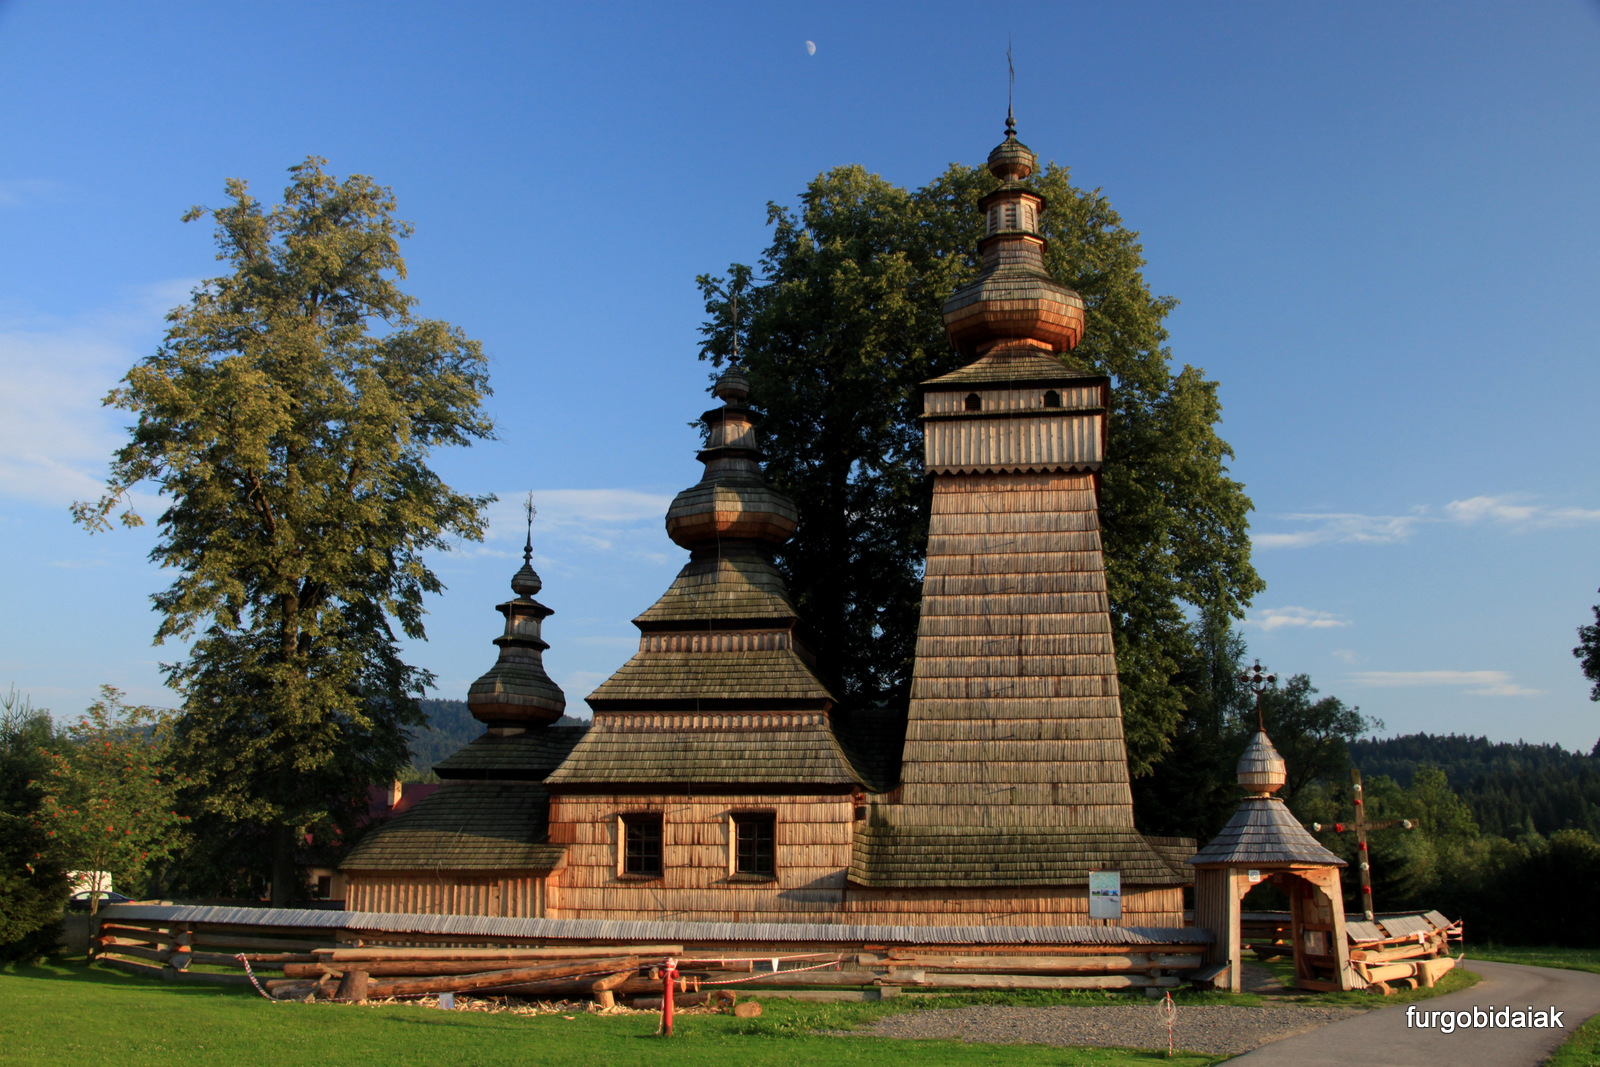 Cerkiew Santa Paraskeva de los Balcanes, Kwiaton, Polonia 